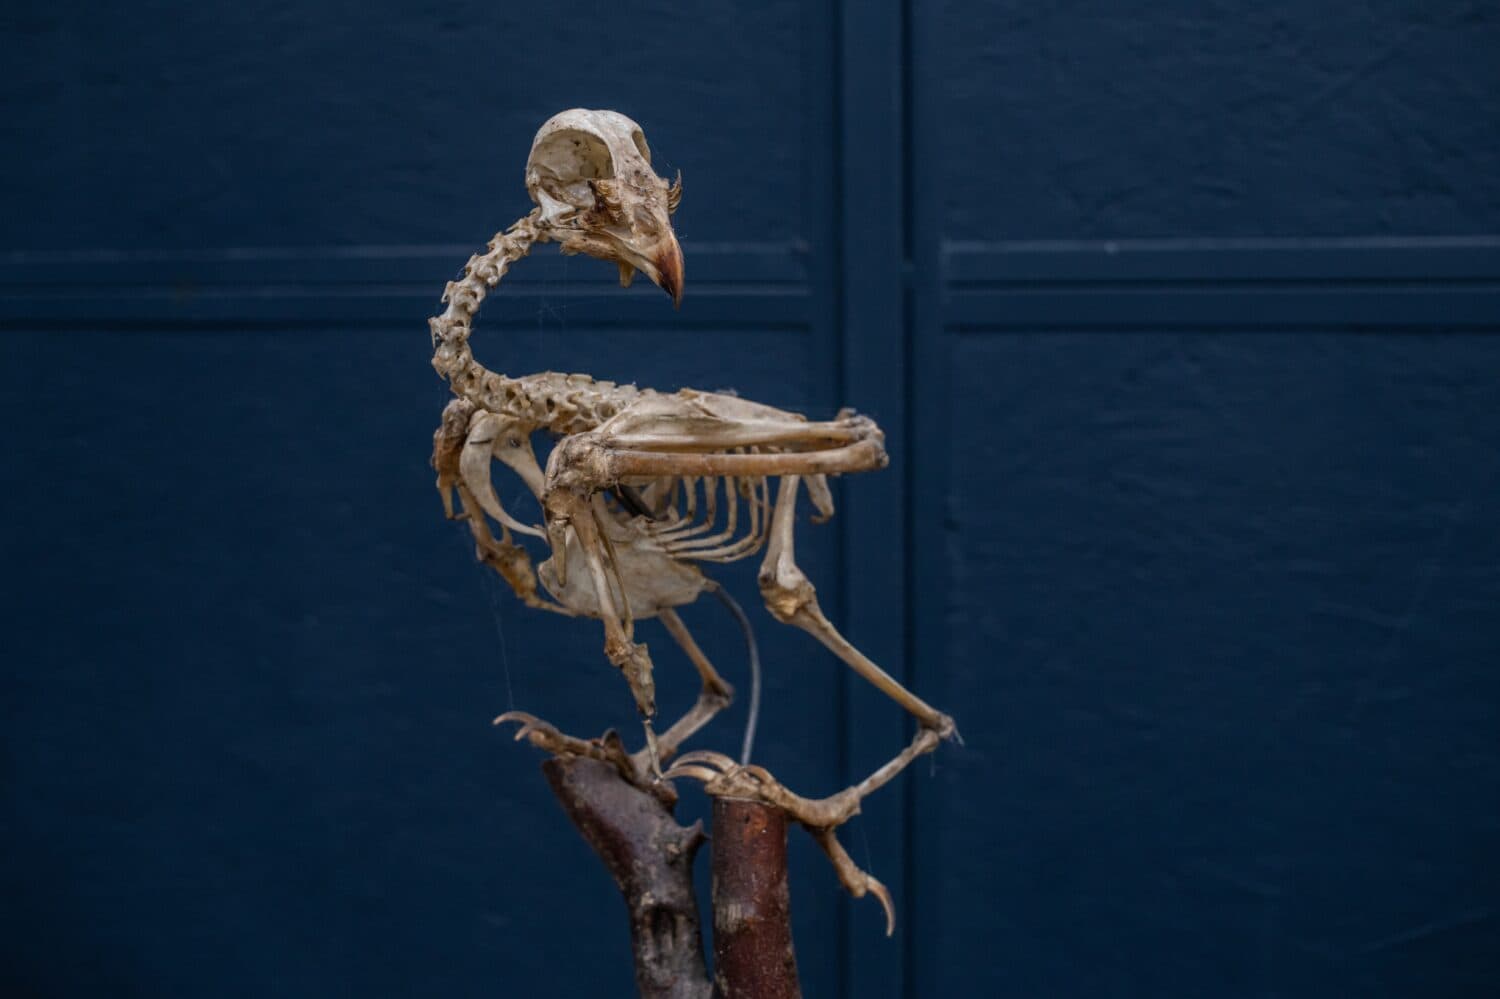 Montagu's harrier bird skeleton on display, sitting on a branch